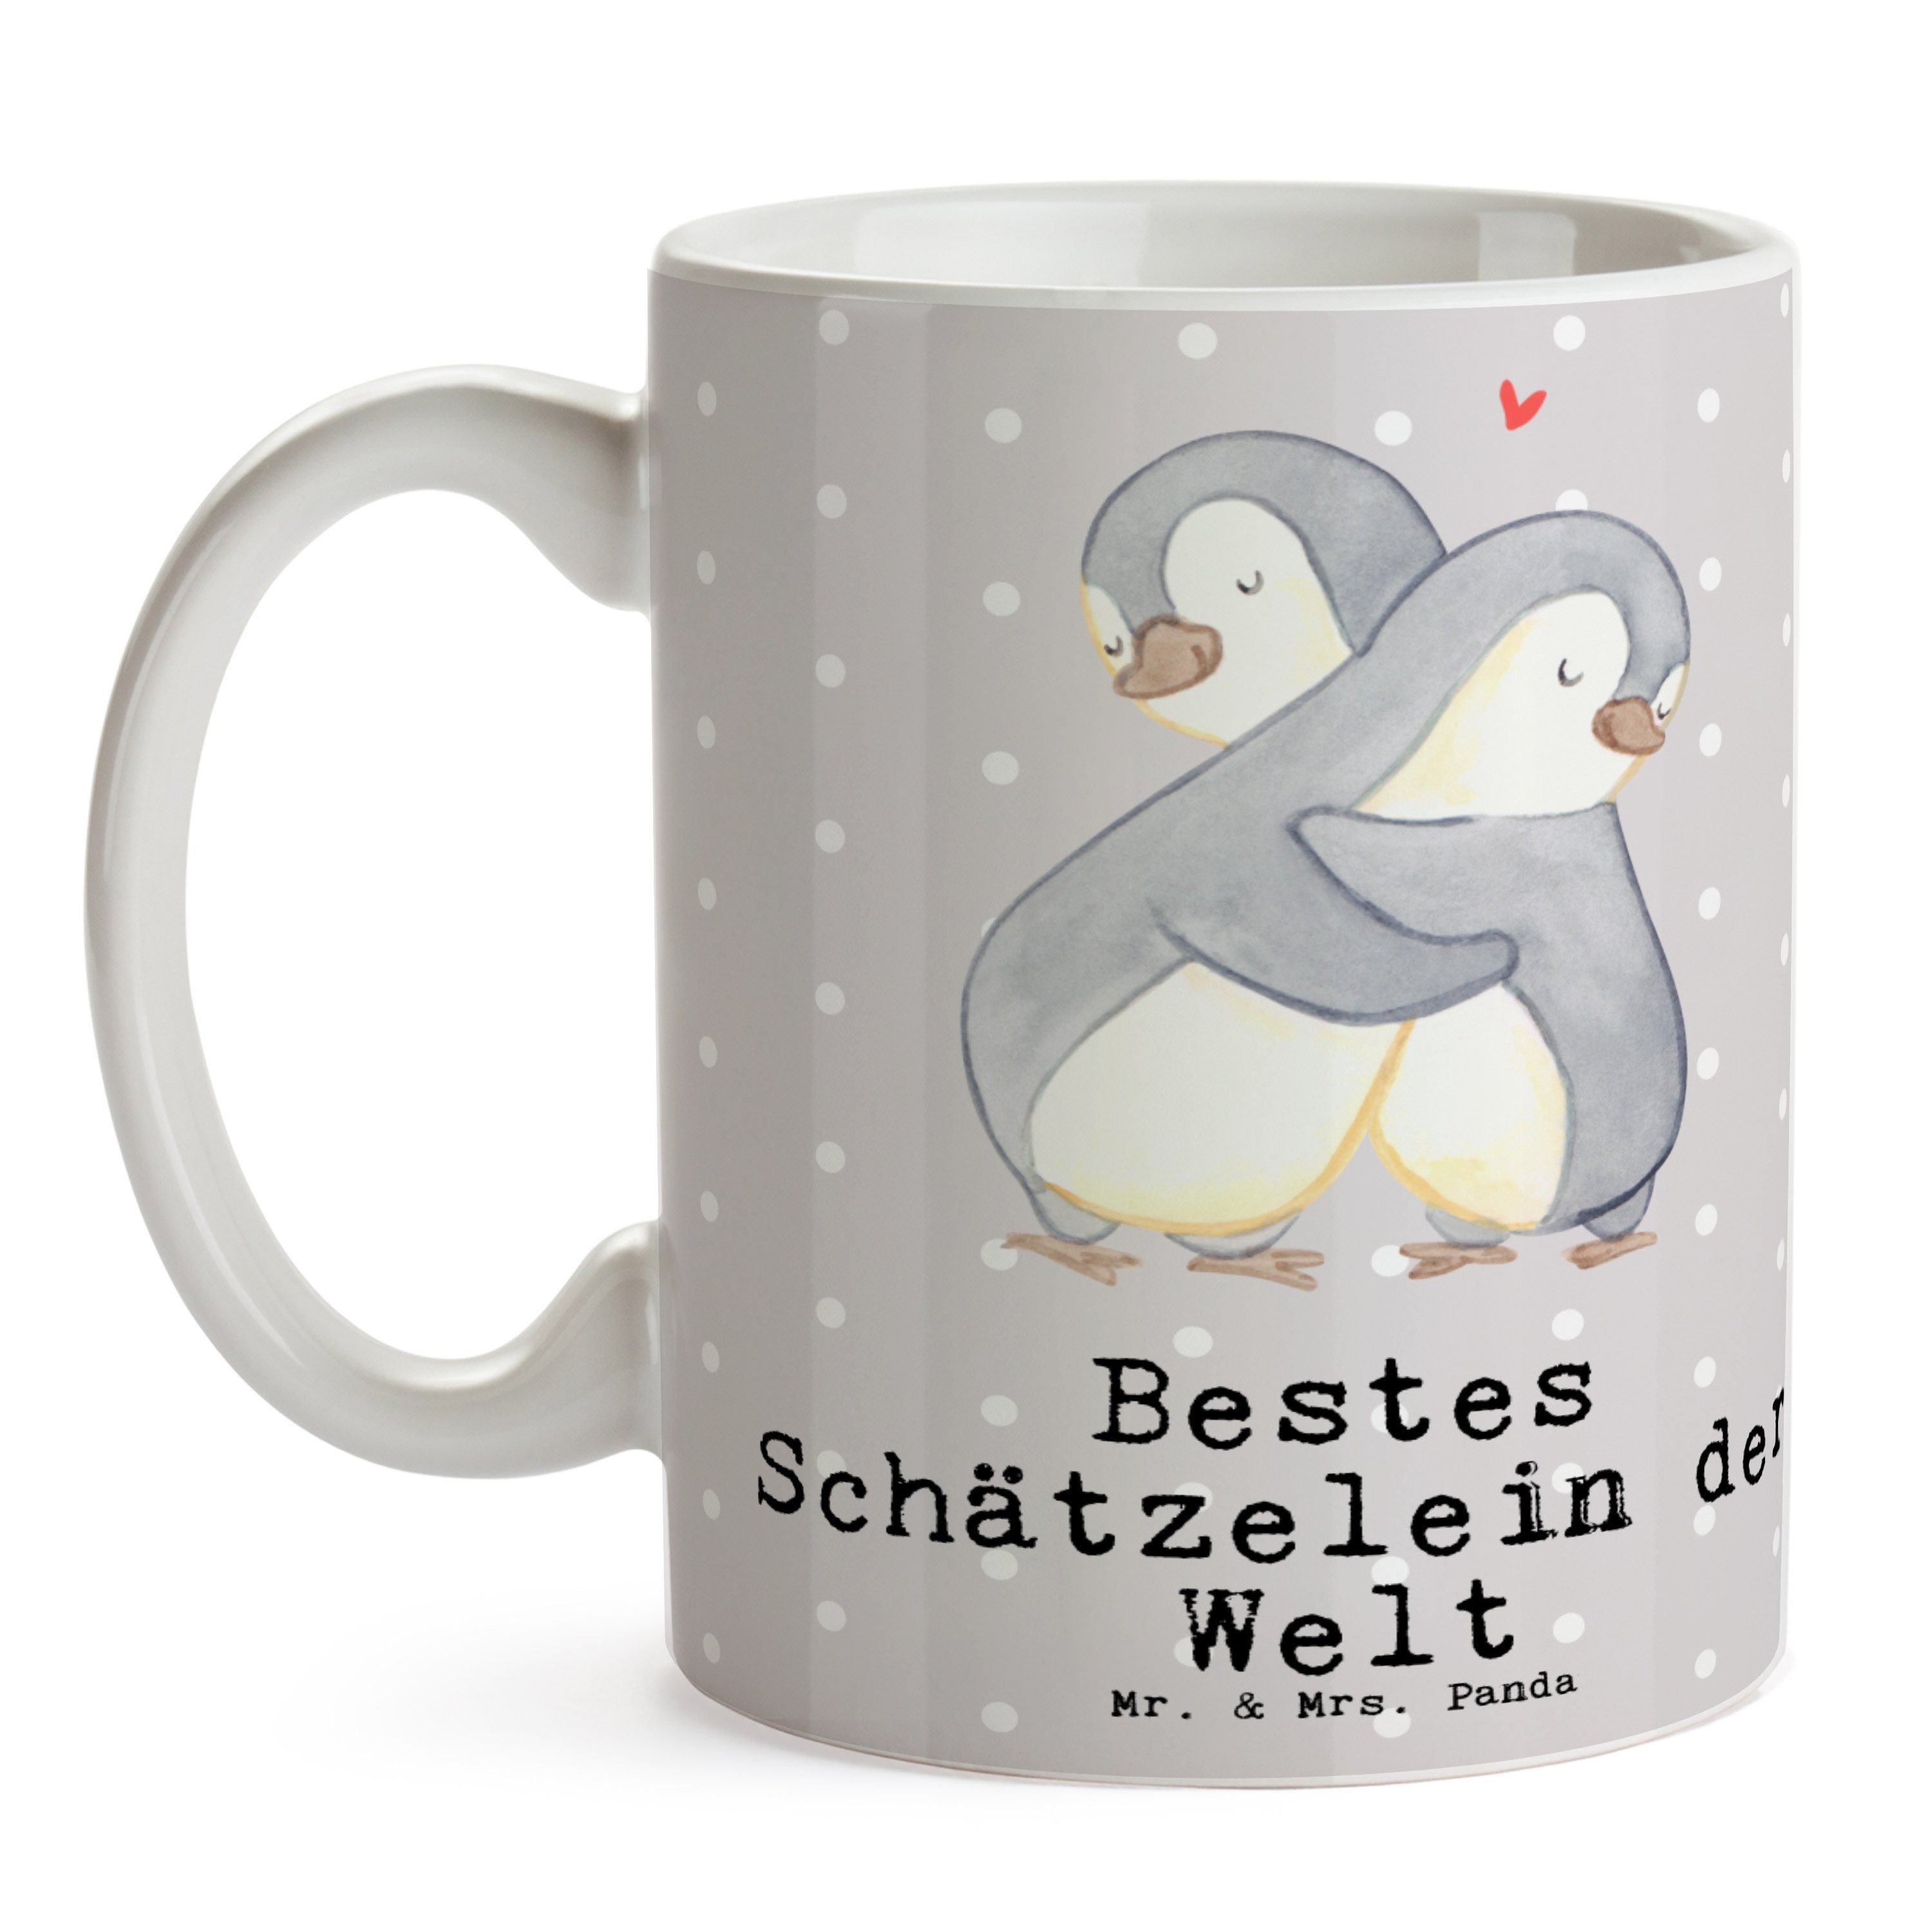 Panda Keramik Welt der Bestes - & - Grau Geschenk, Pastell Schätzelein Gesche, Mr. Mrs. Pinguin Tasse